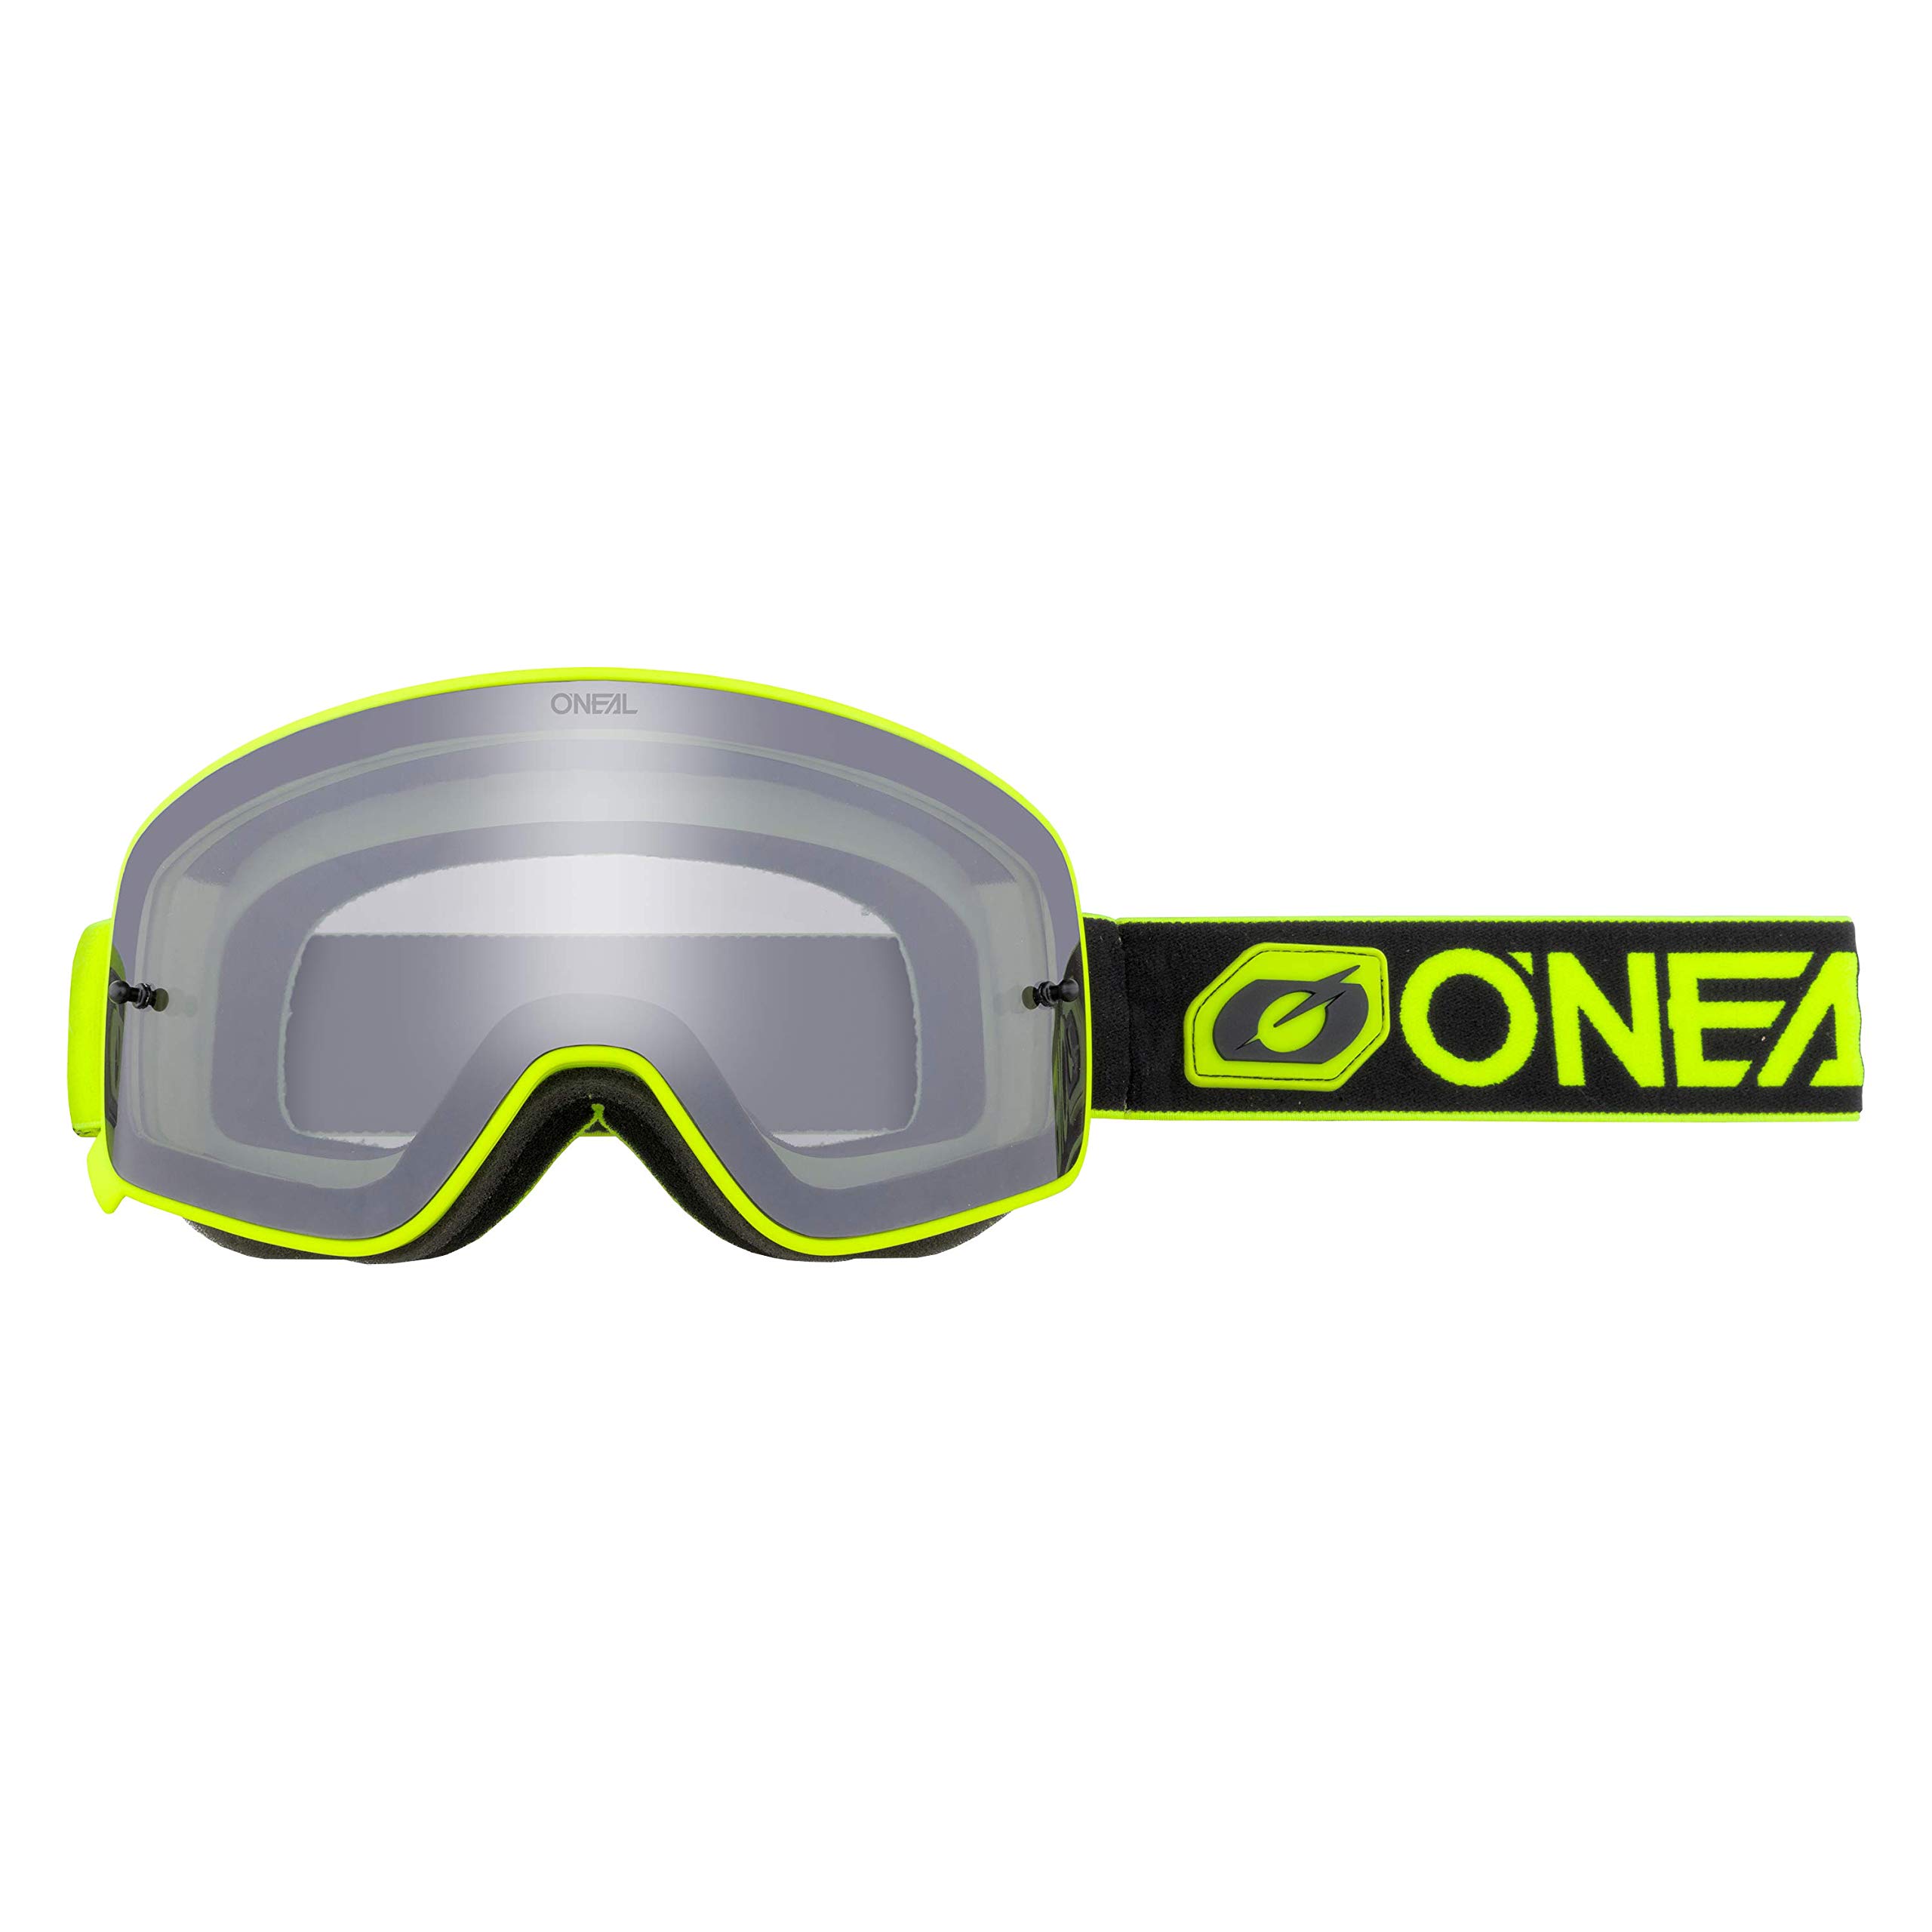 O'NEAL | Fahrrad- & Motocross-Brille | MX MTB DH FR Downhill Freeride | Verstellbares Band, optimaler Komfort, perfekte Belüftung | B-50 Goggle | Unisex | Schwarz Neon-Gelb verspiegelt | One Size